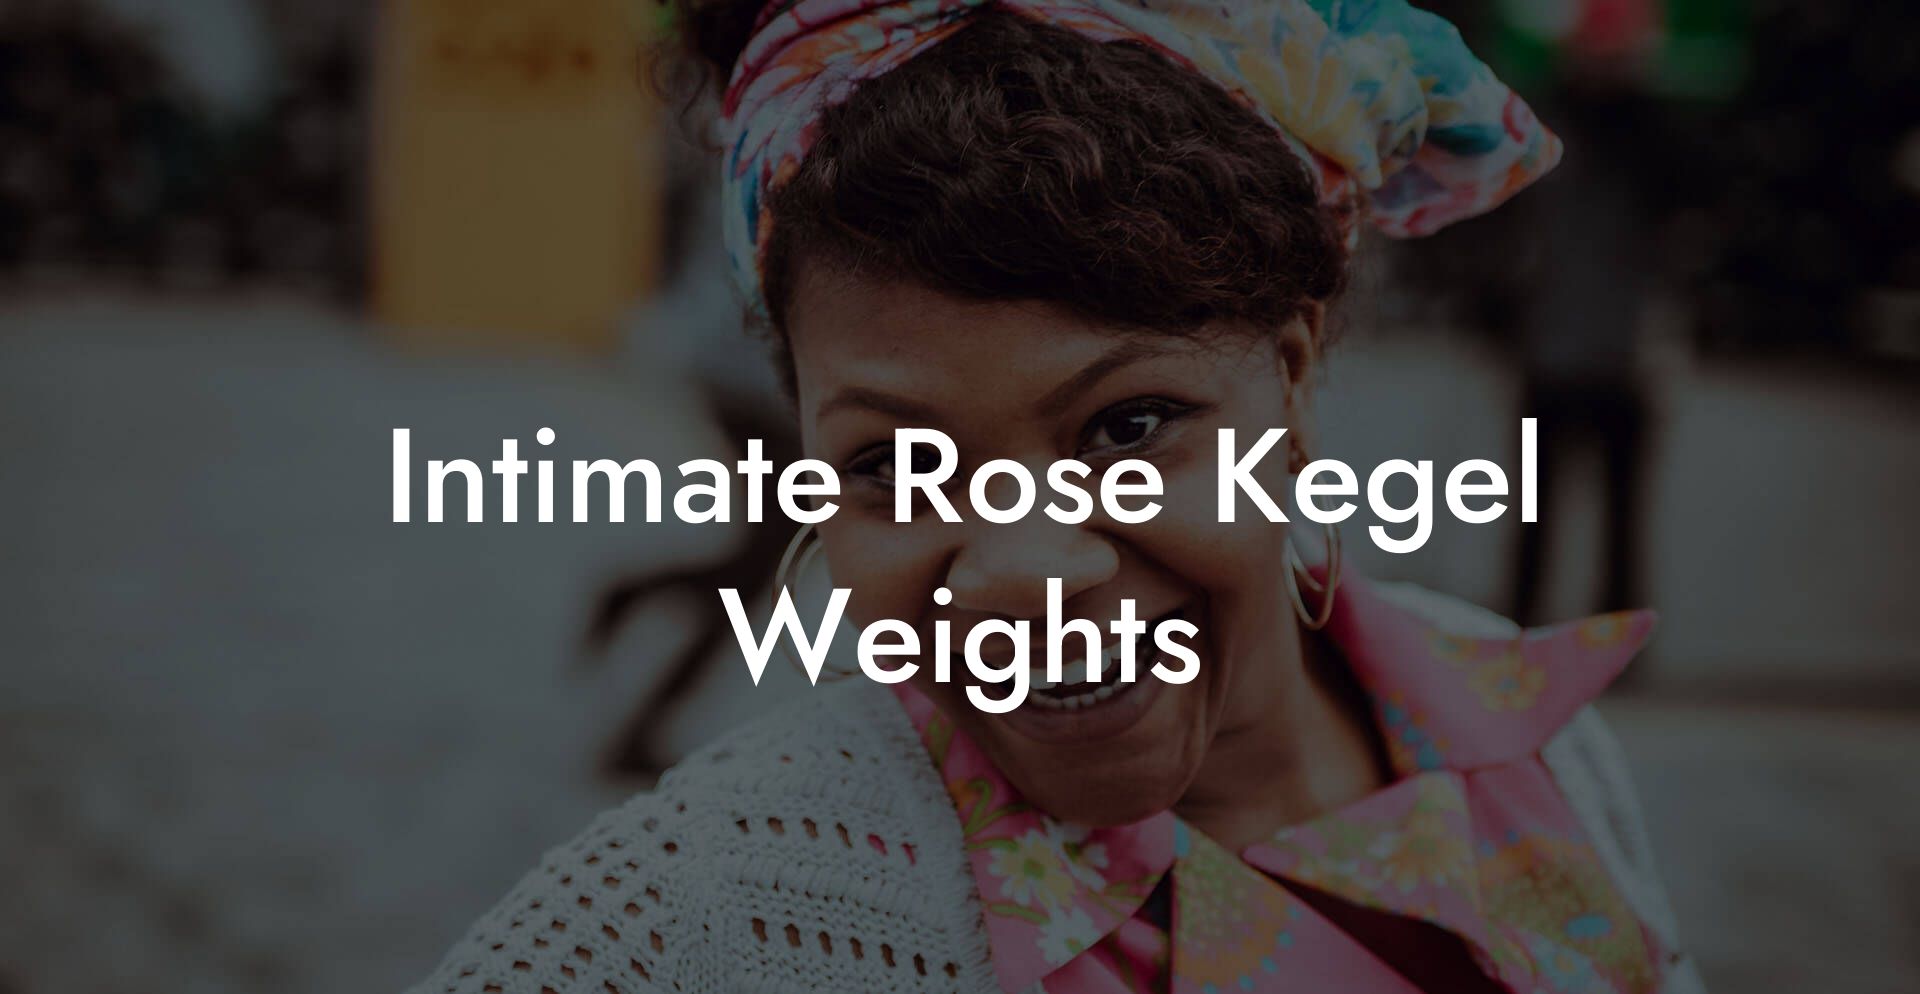 Intimate Rose Kegel Weights